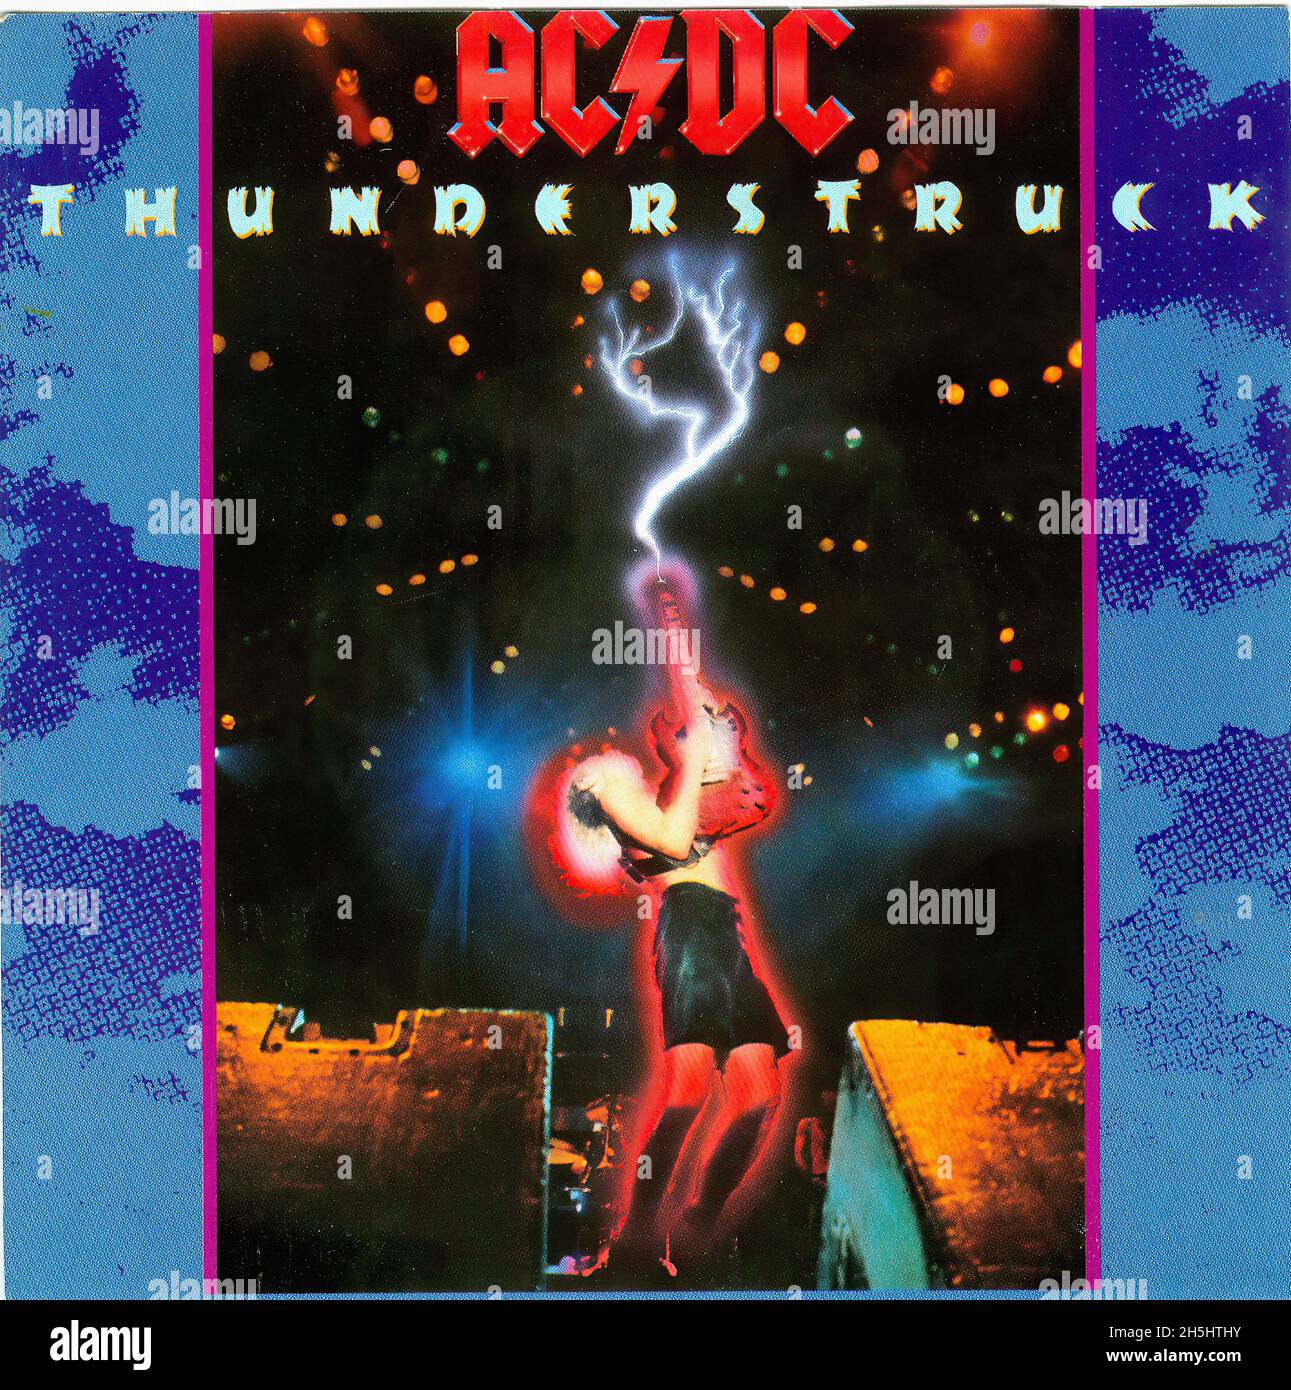 Vintage Single Record Cover - AC-DC - Thunderstruck - D - 1990  Stockfotografie - Alamy